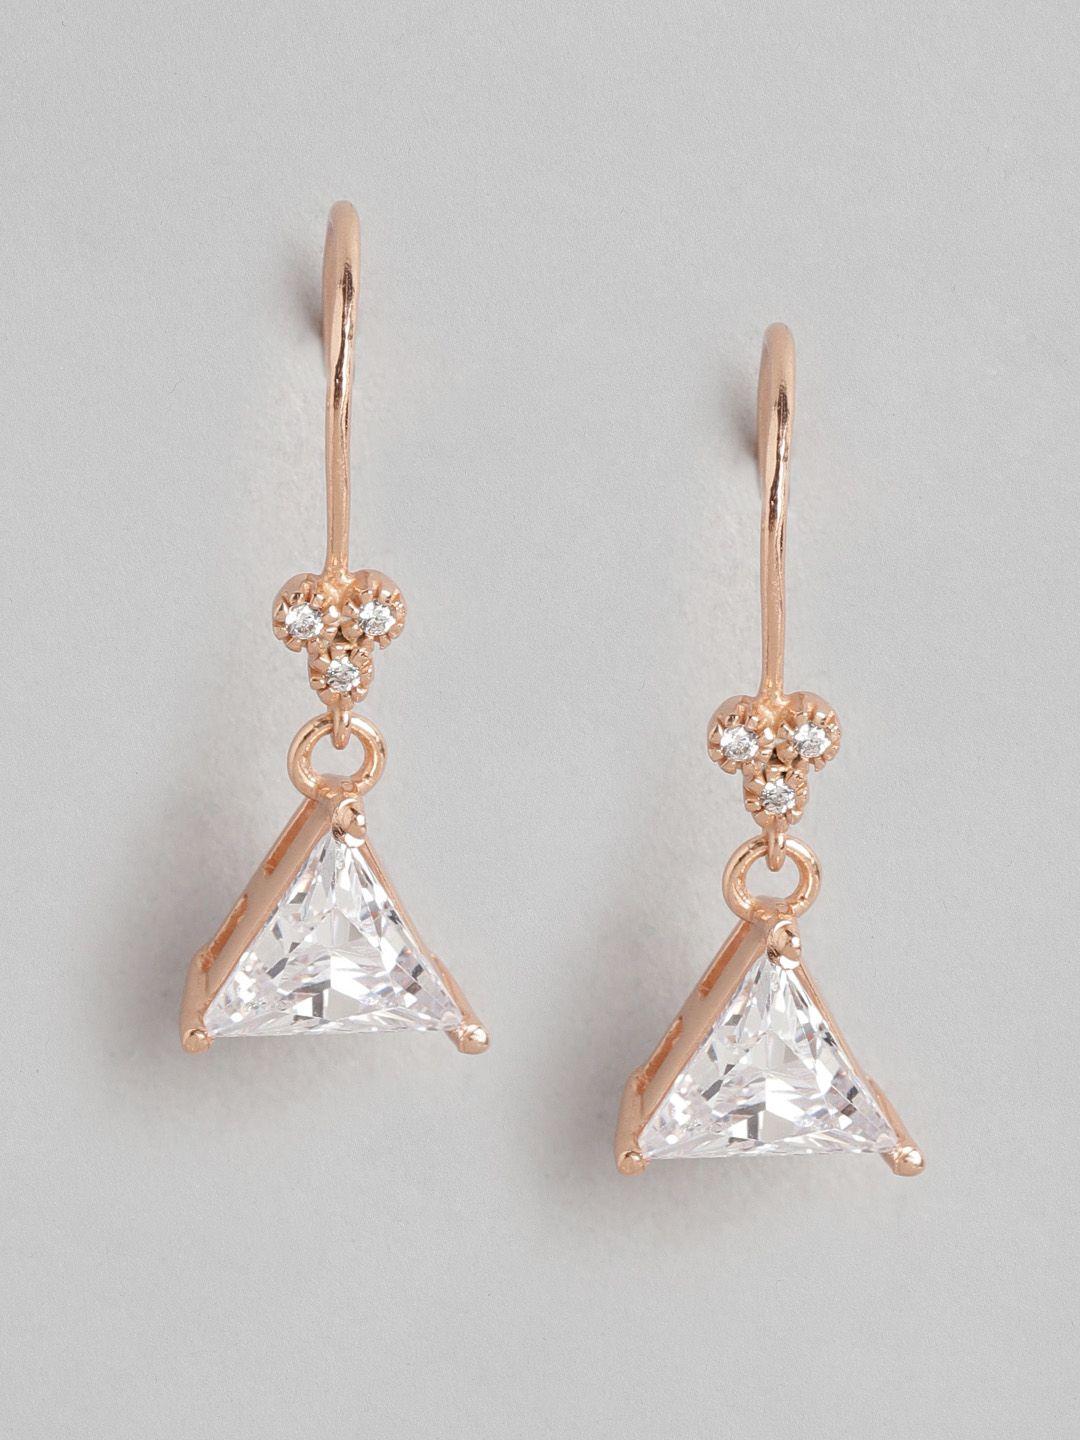 carlton london rose gold plated cz studded triangular drop earrings